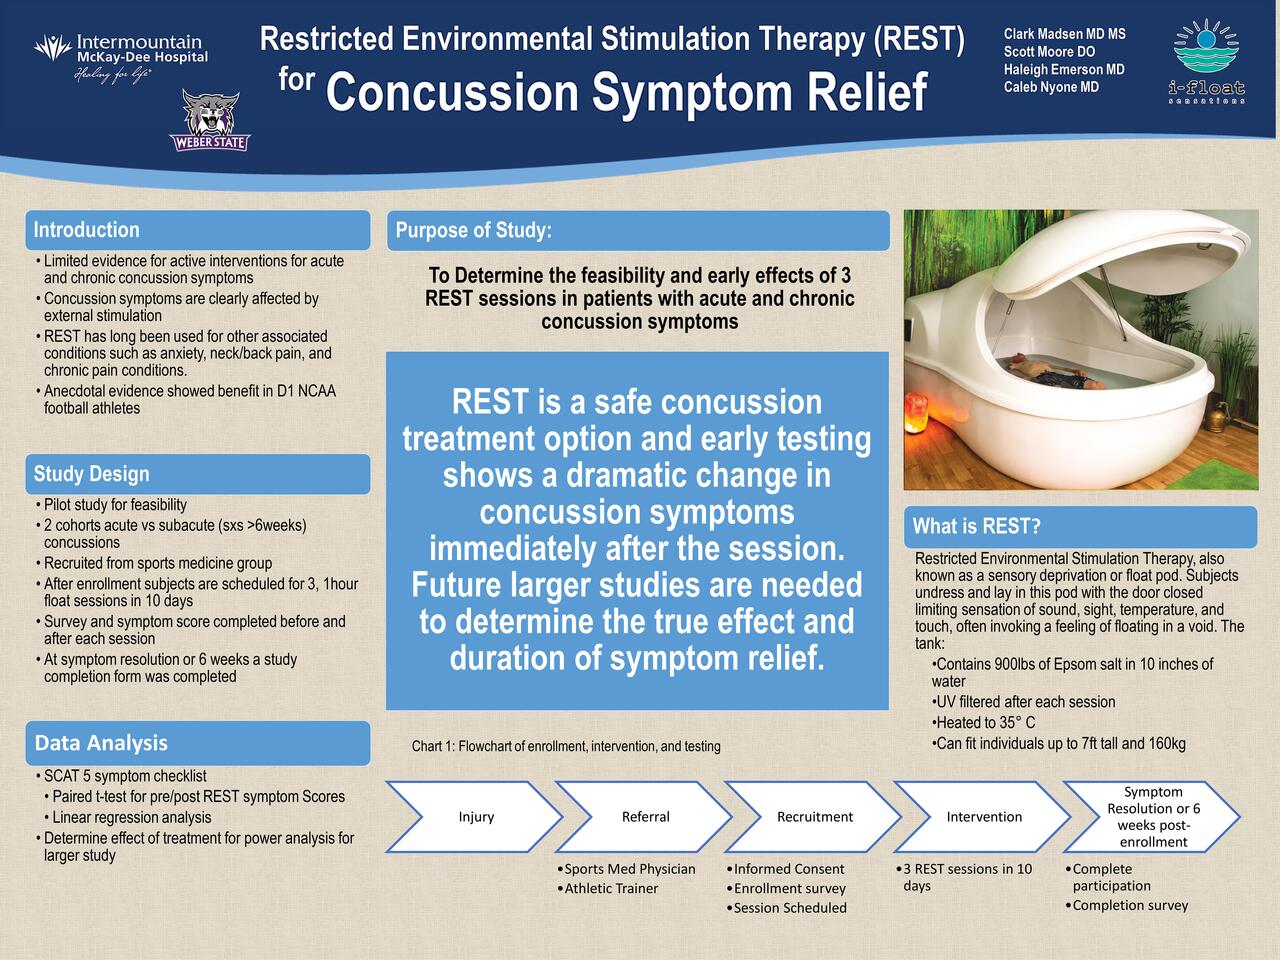 REST for Concussion Symptom Relief